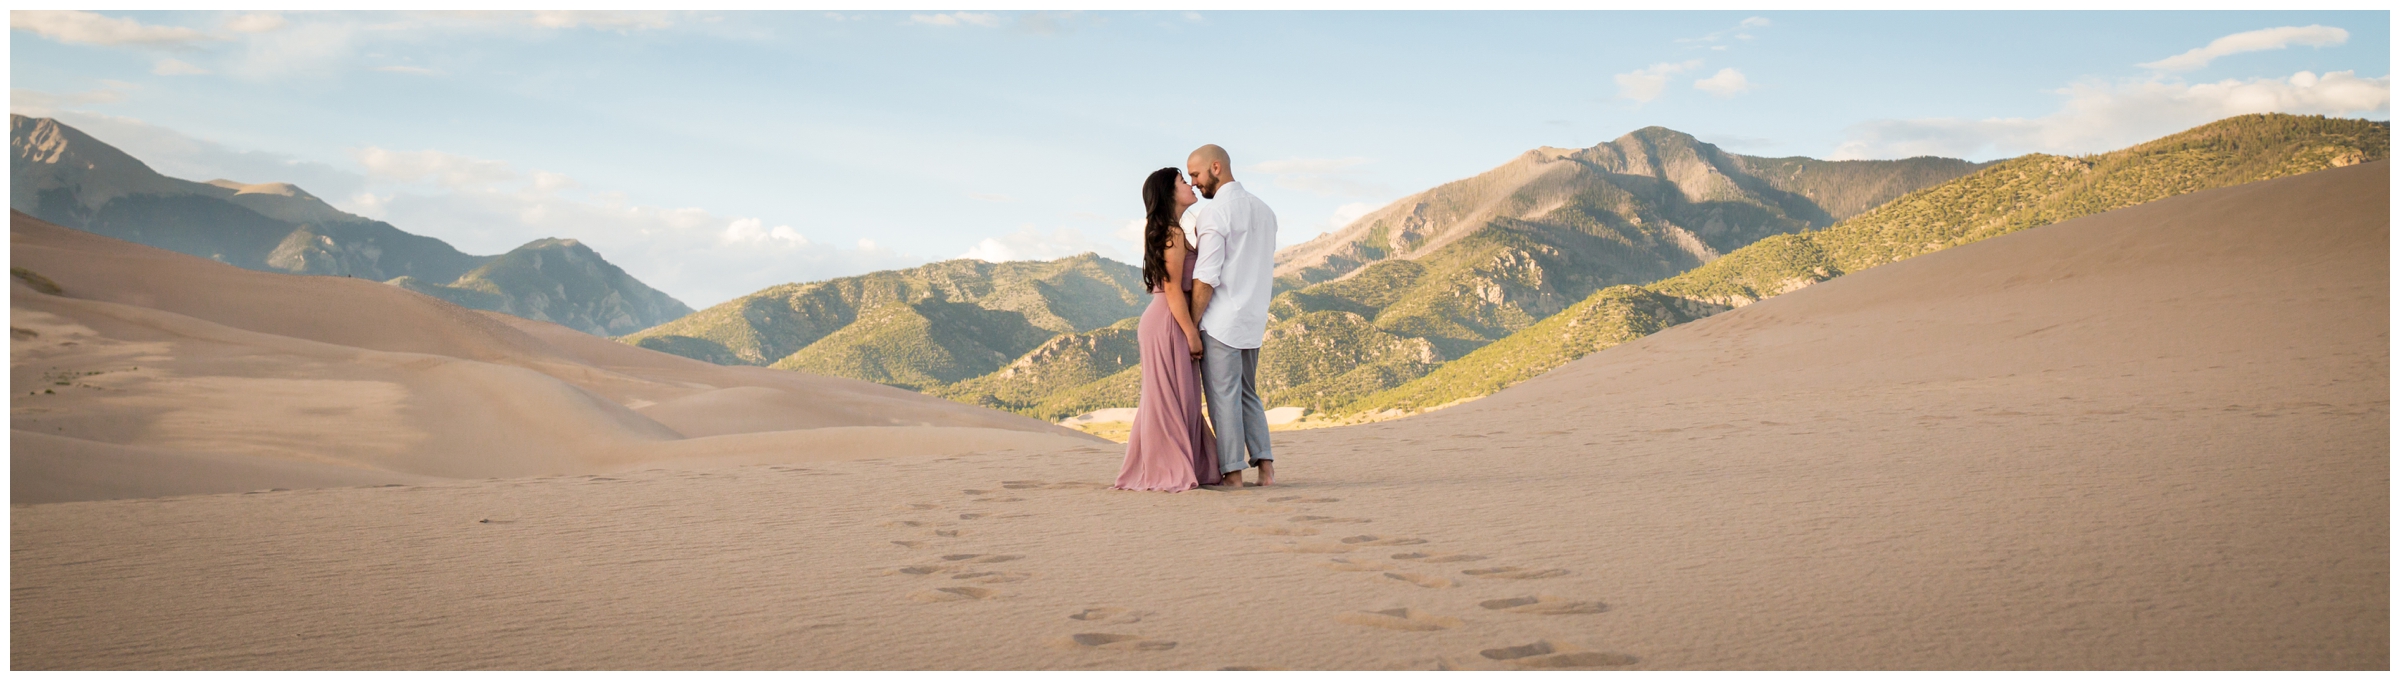 unique engagement photos at the Great Sand Dunes Colorado